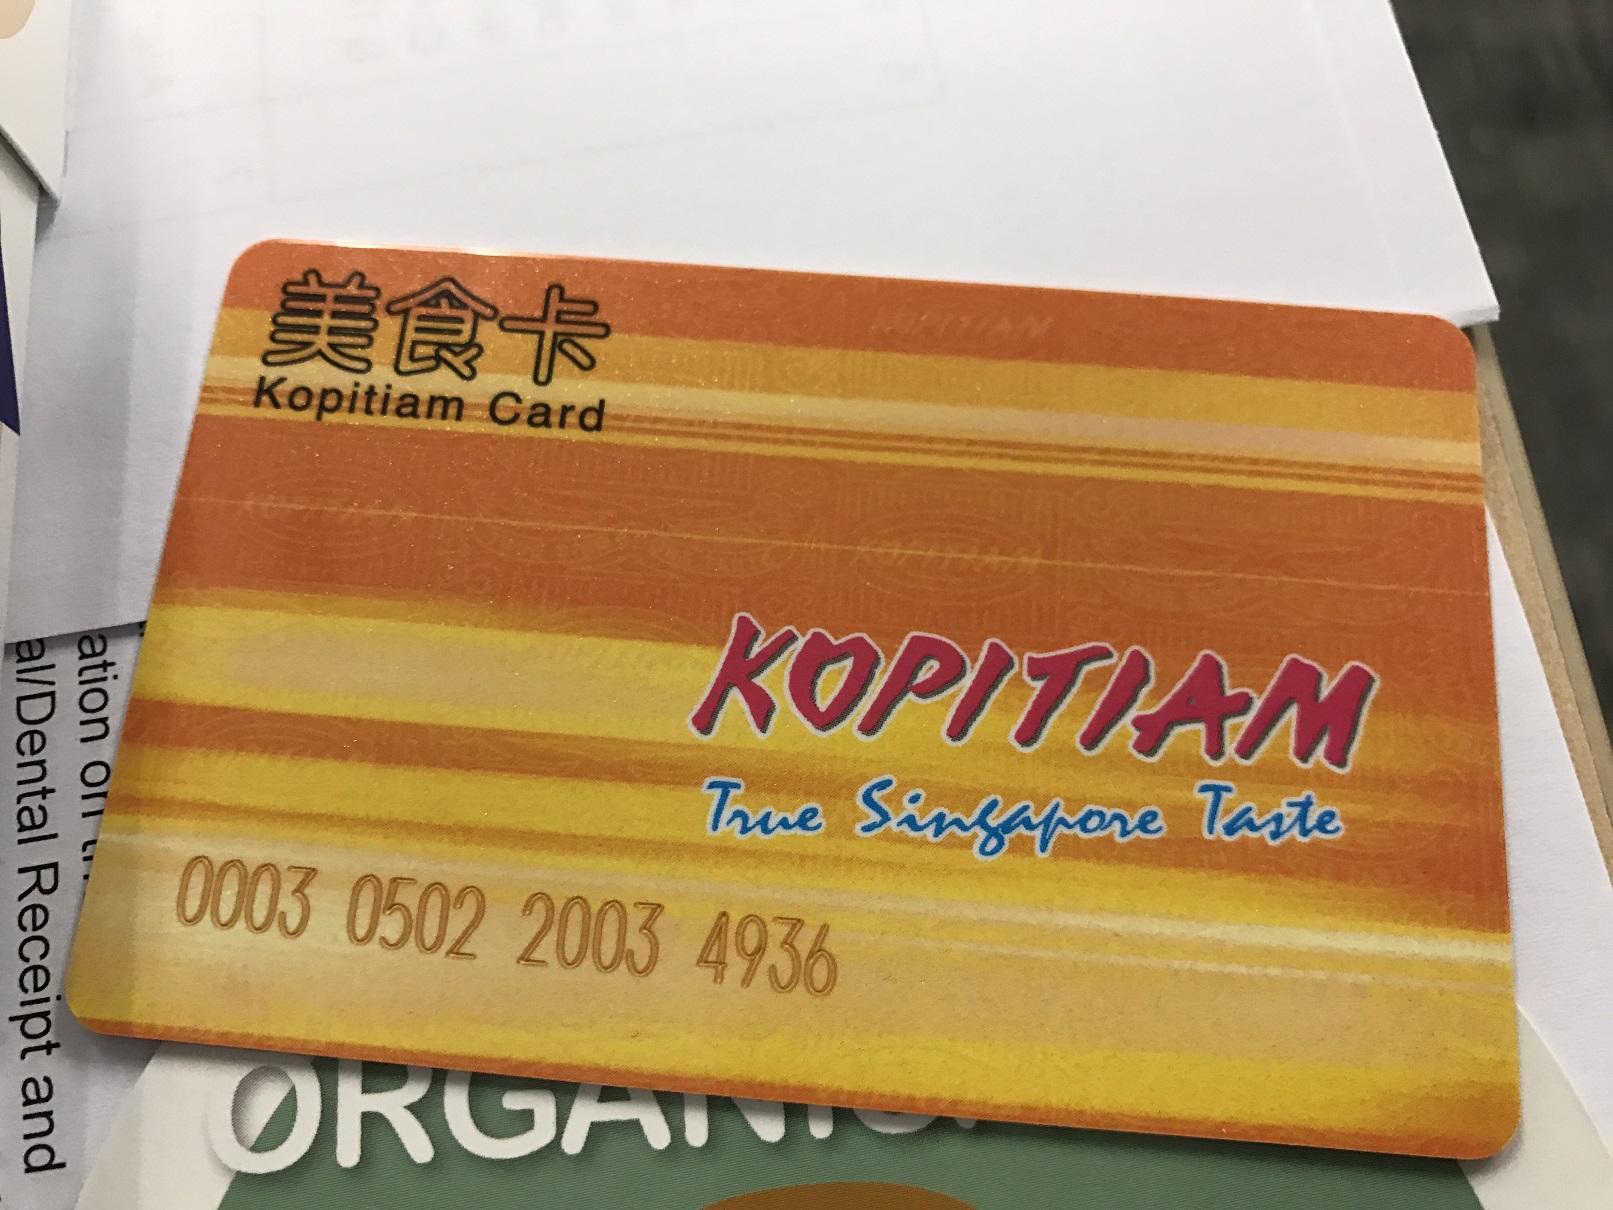 Yay! I got the legendary 20% kopitiam card! muahaha!